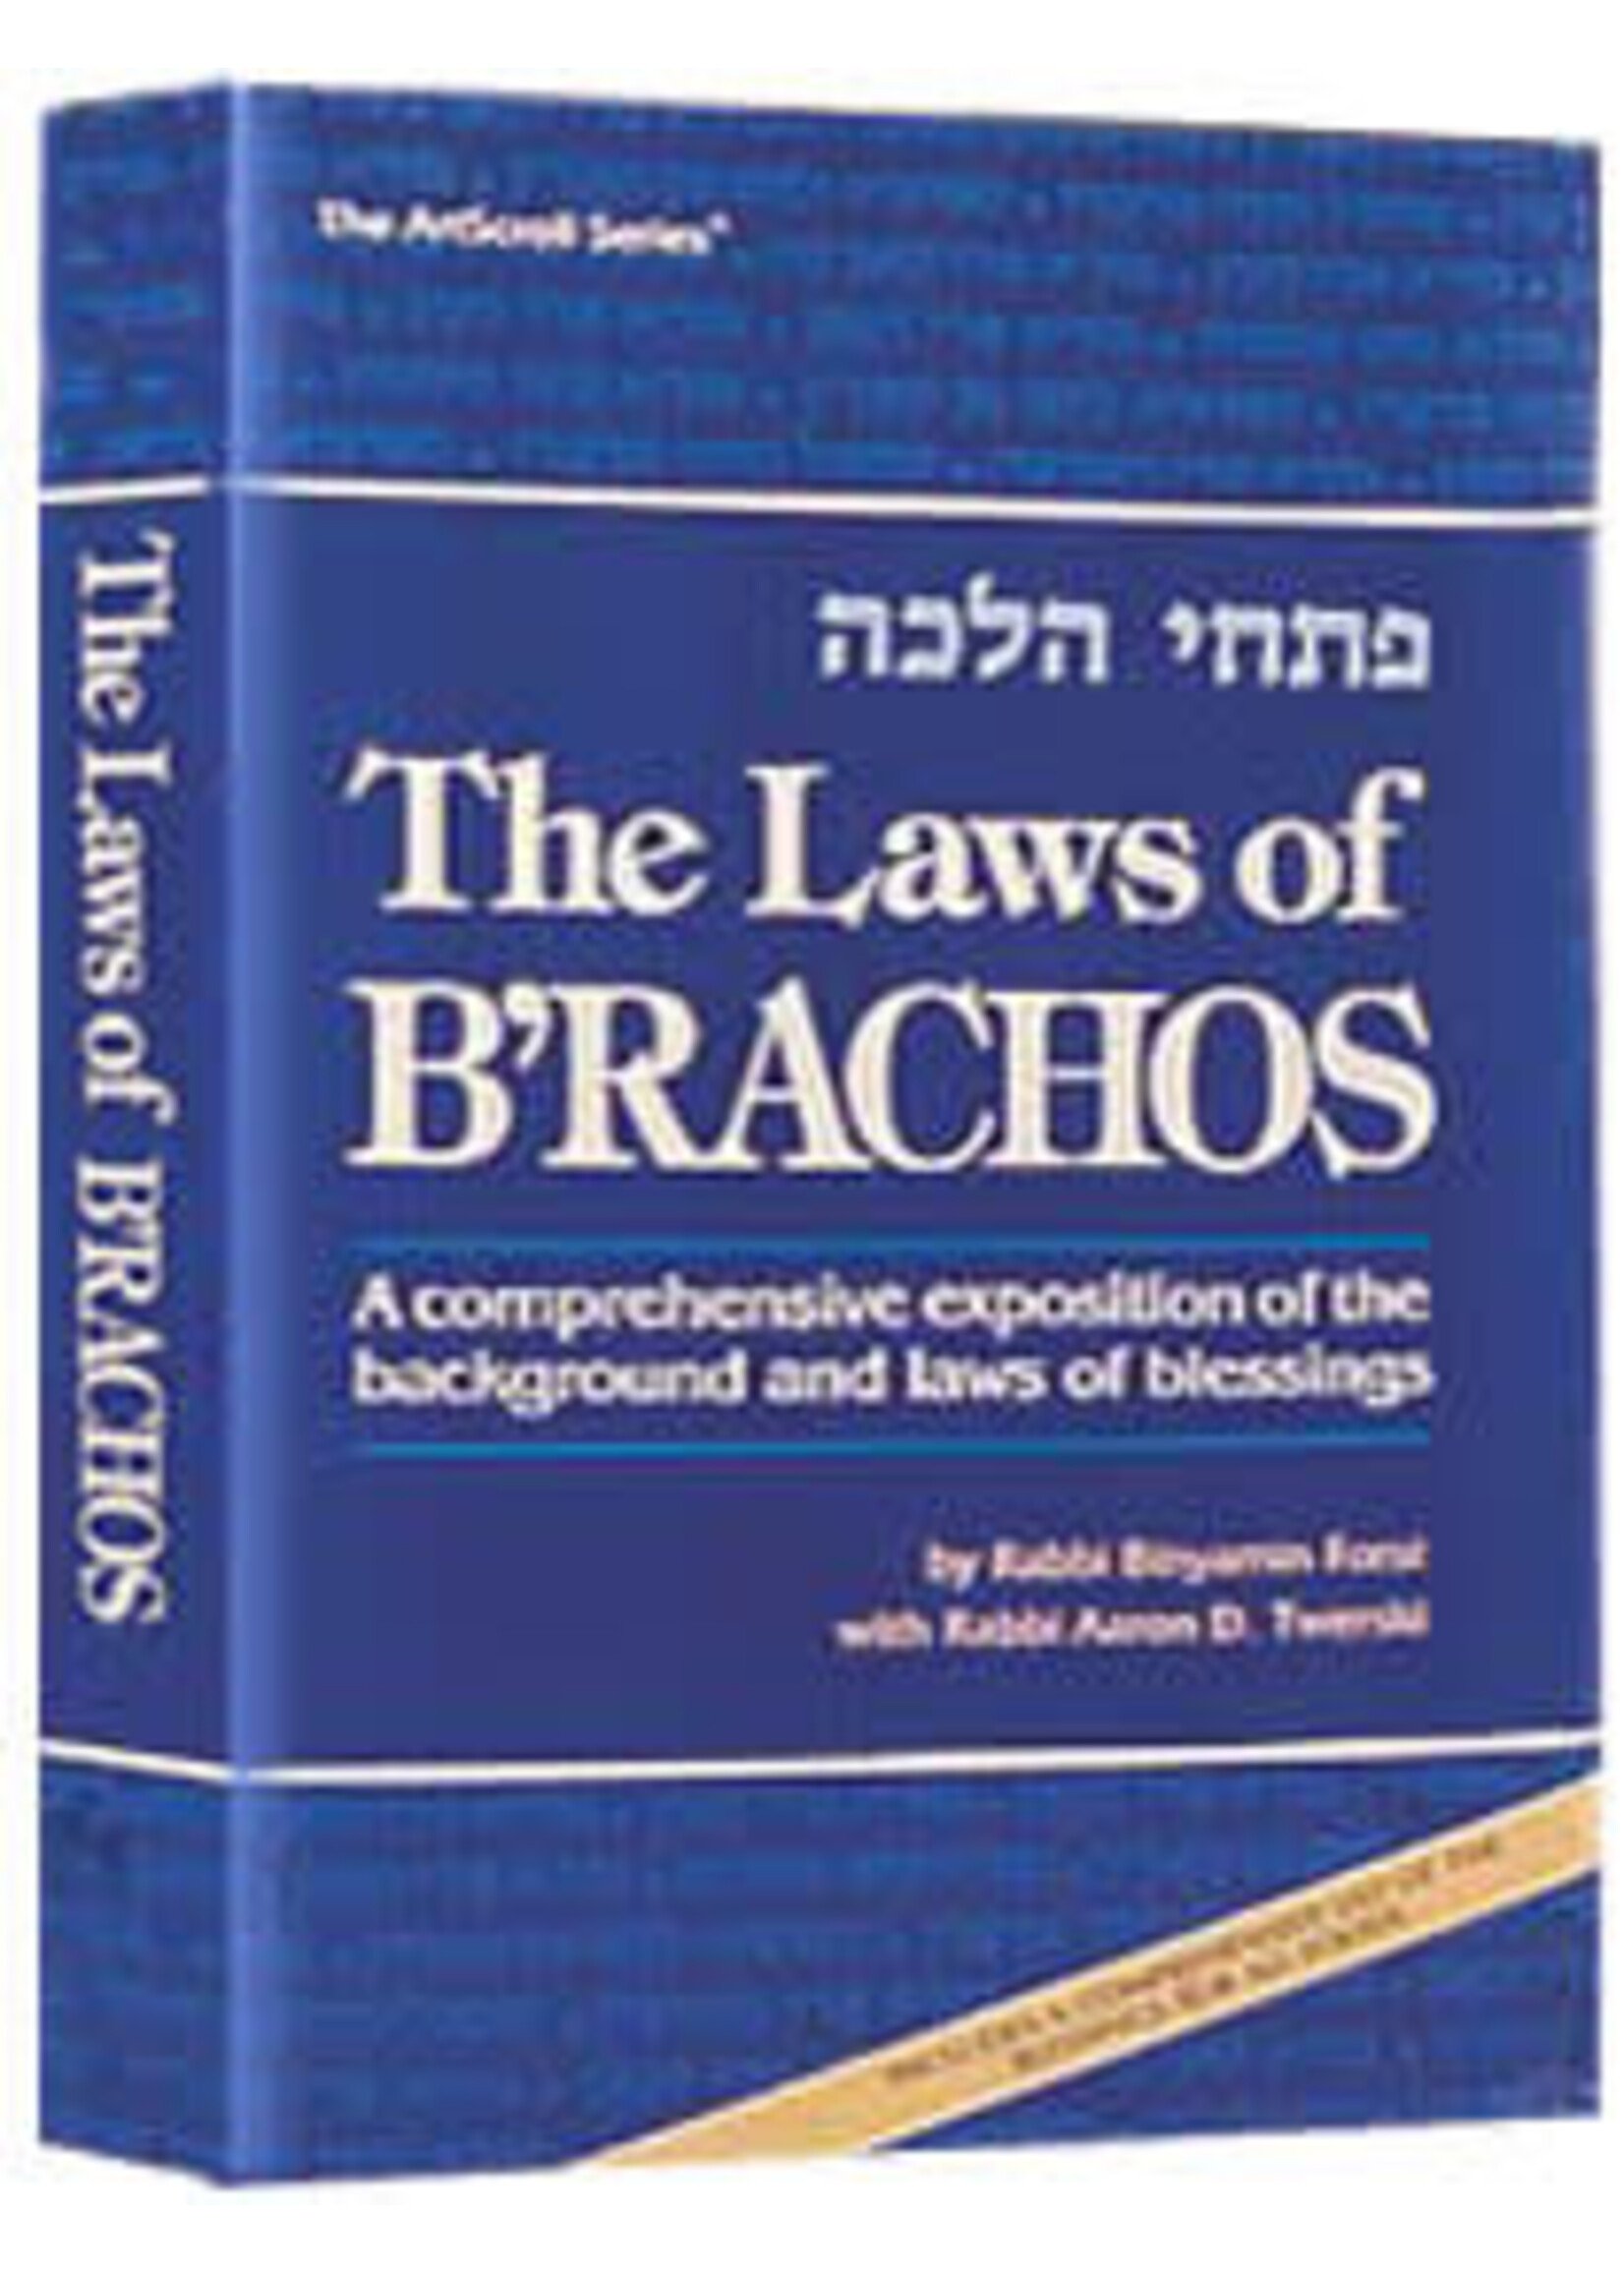 LAWS OF B'RACHOS H/C